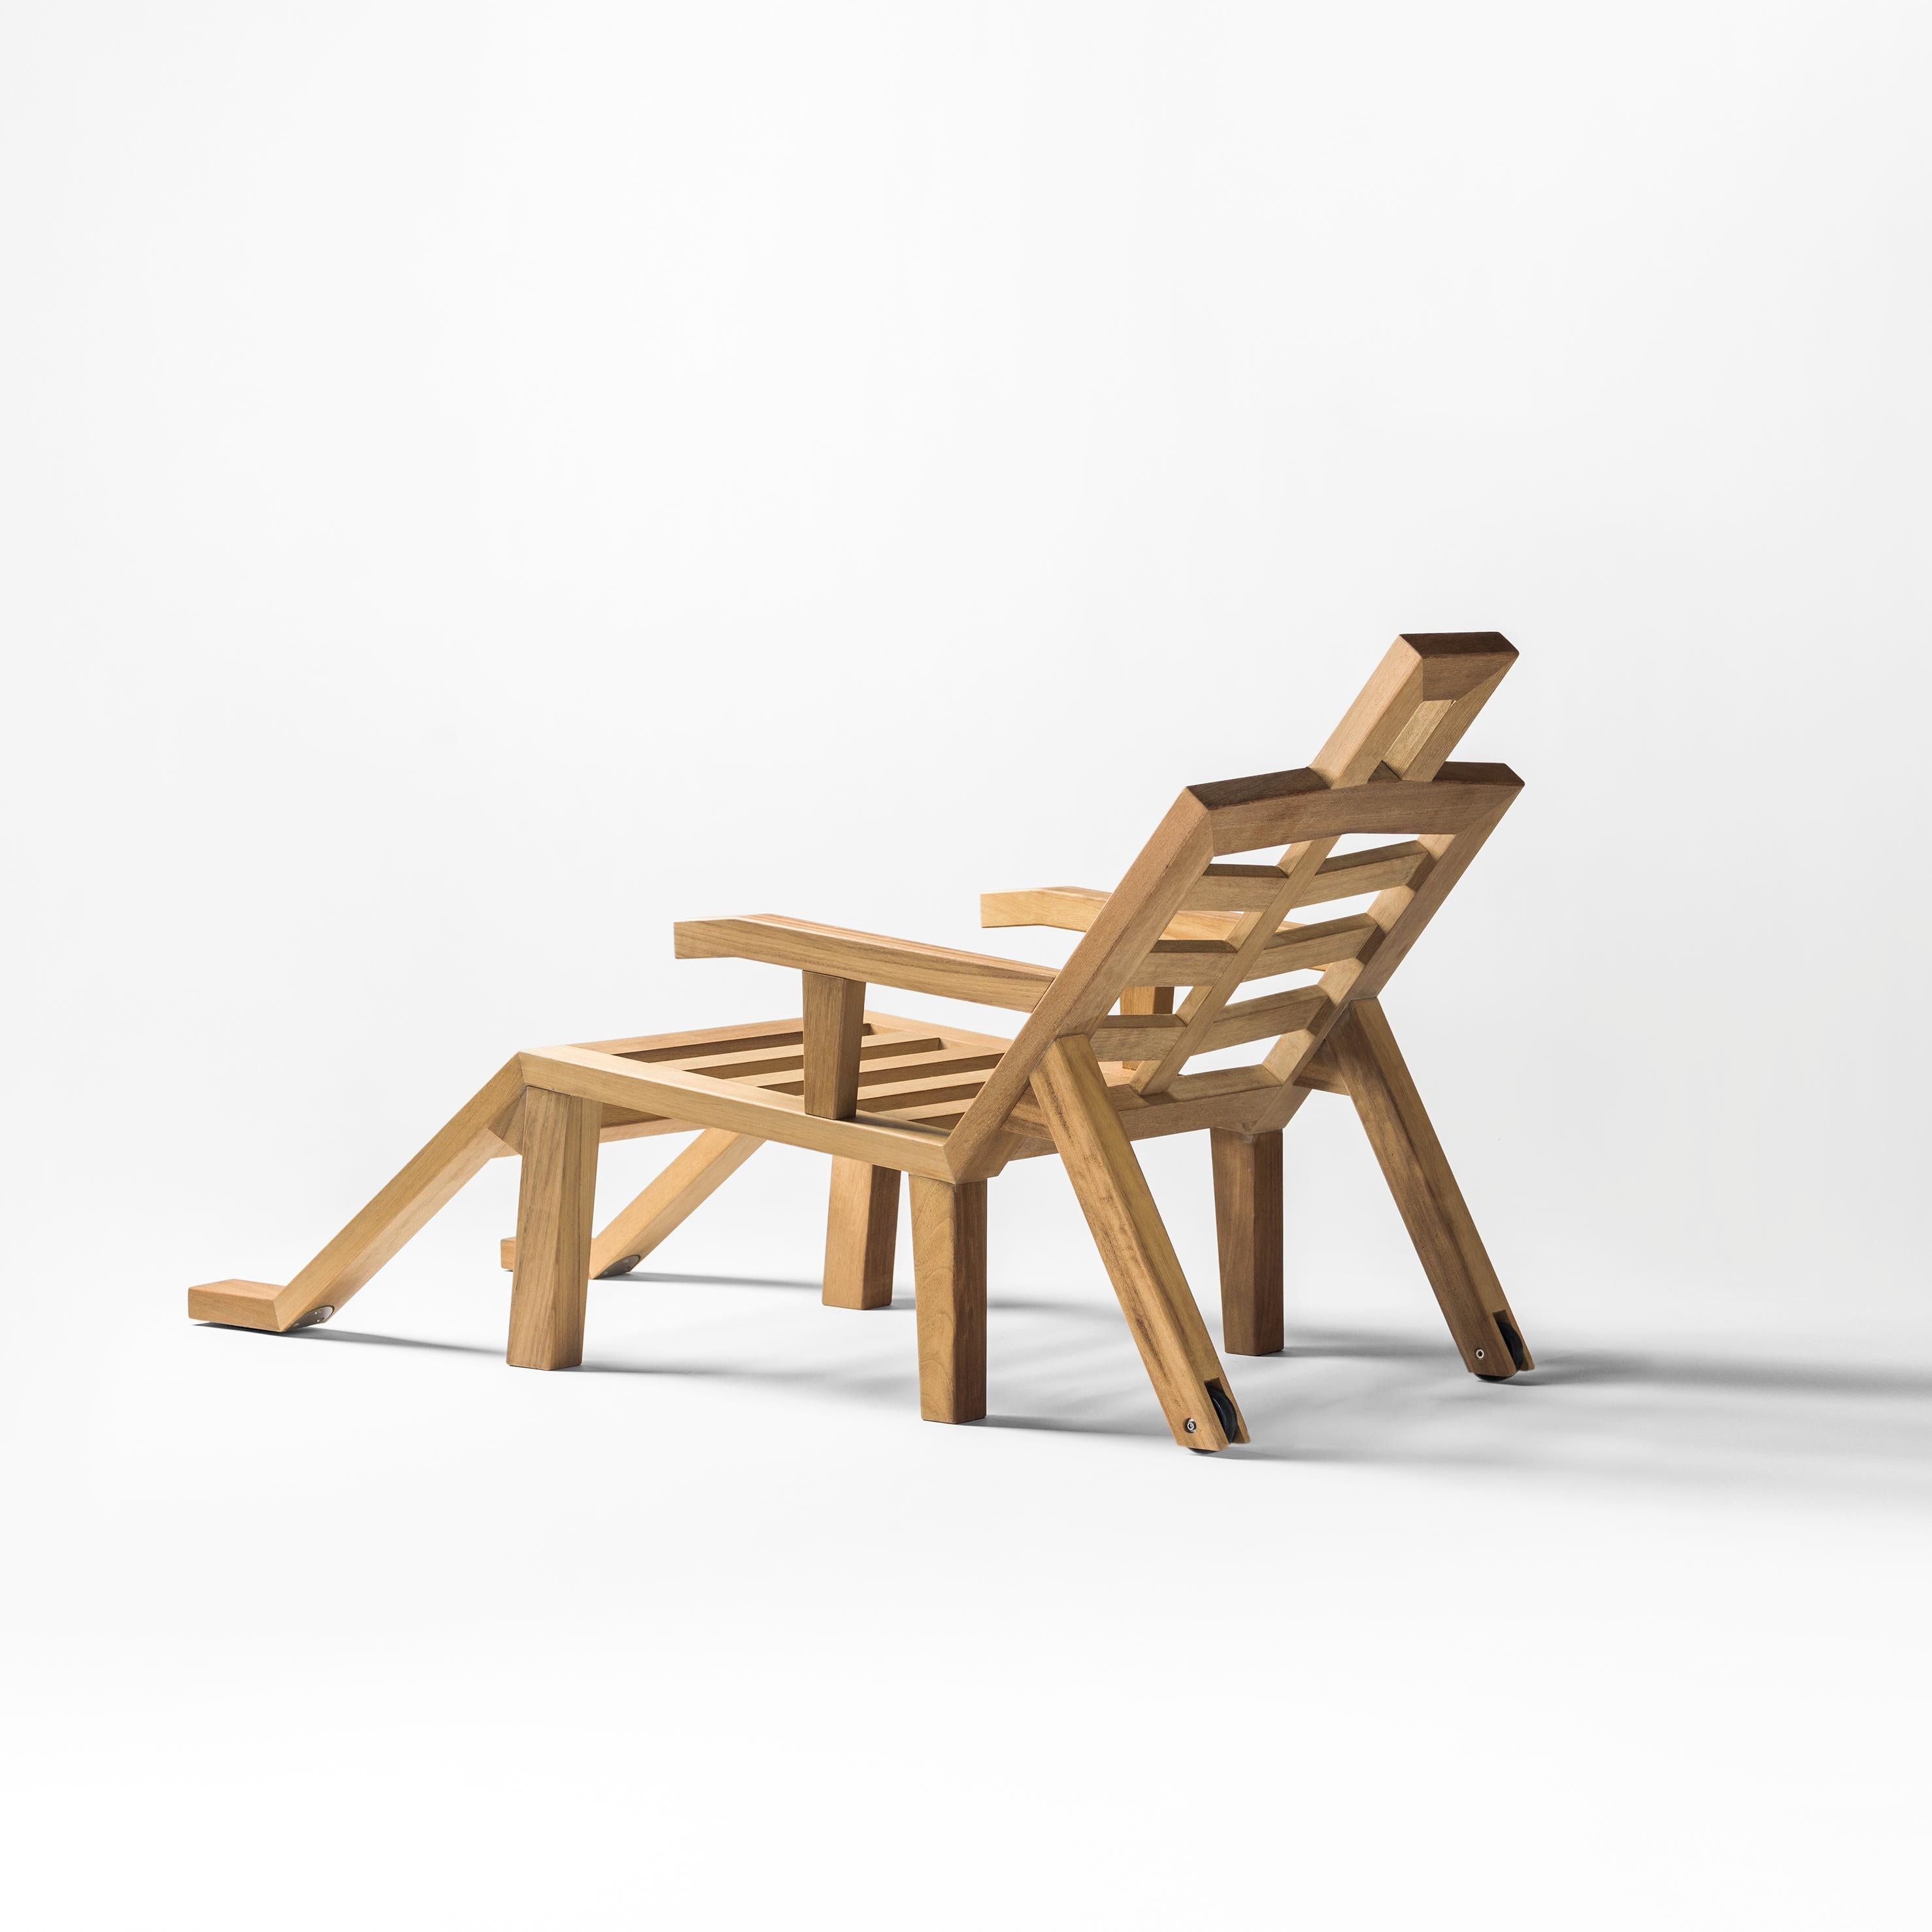 Spanish Salvador Dali Contemporary Portlligat Wood Sculpture Sunbed For Sale